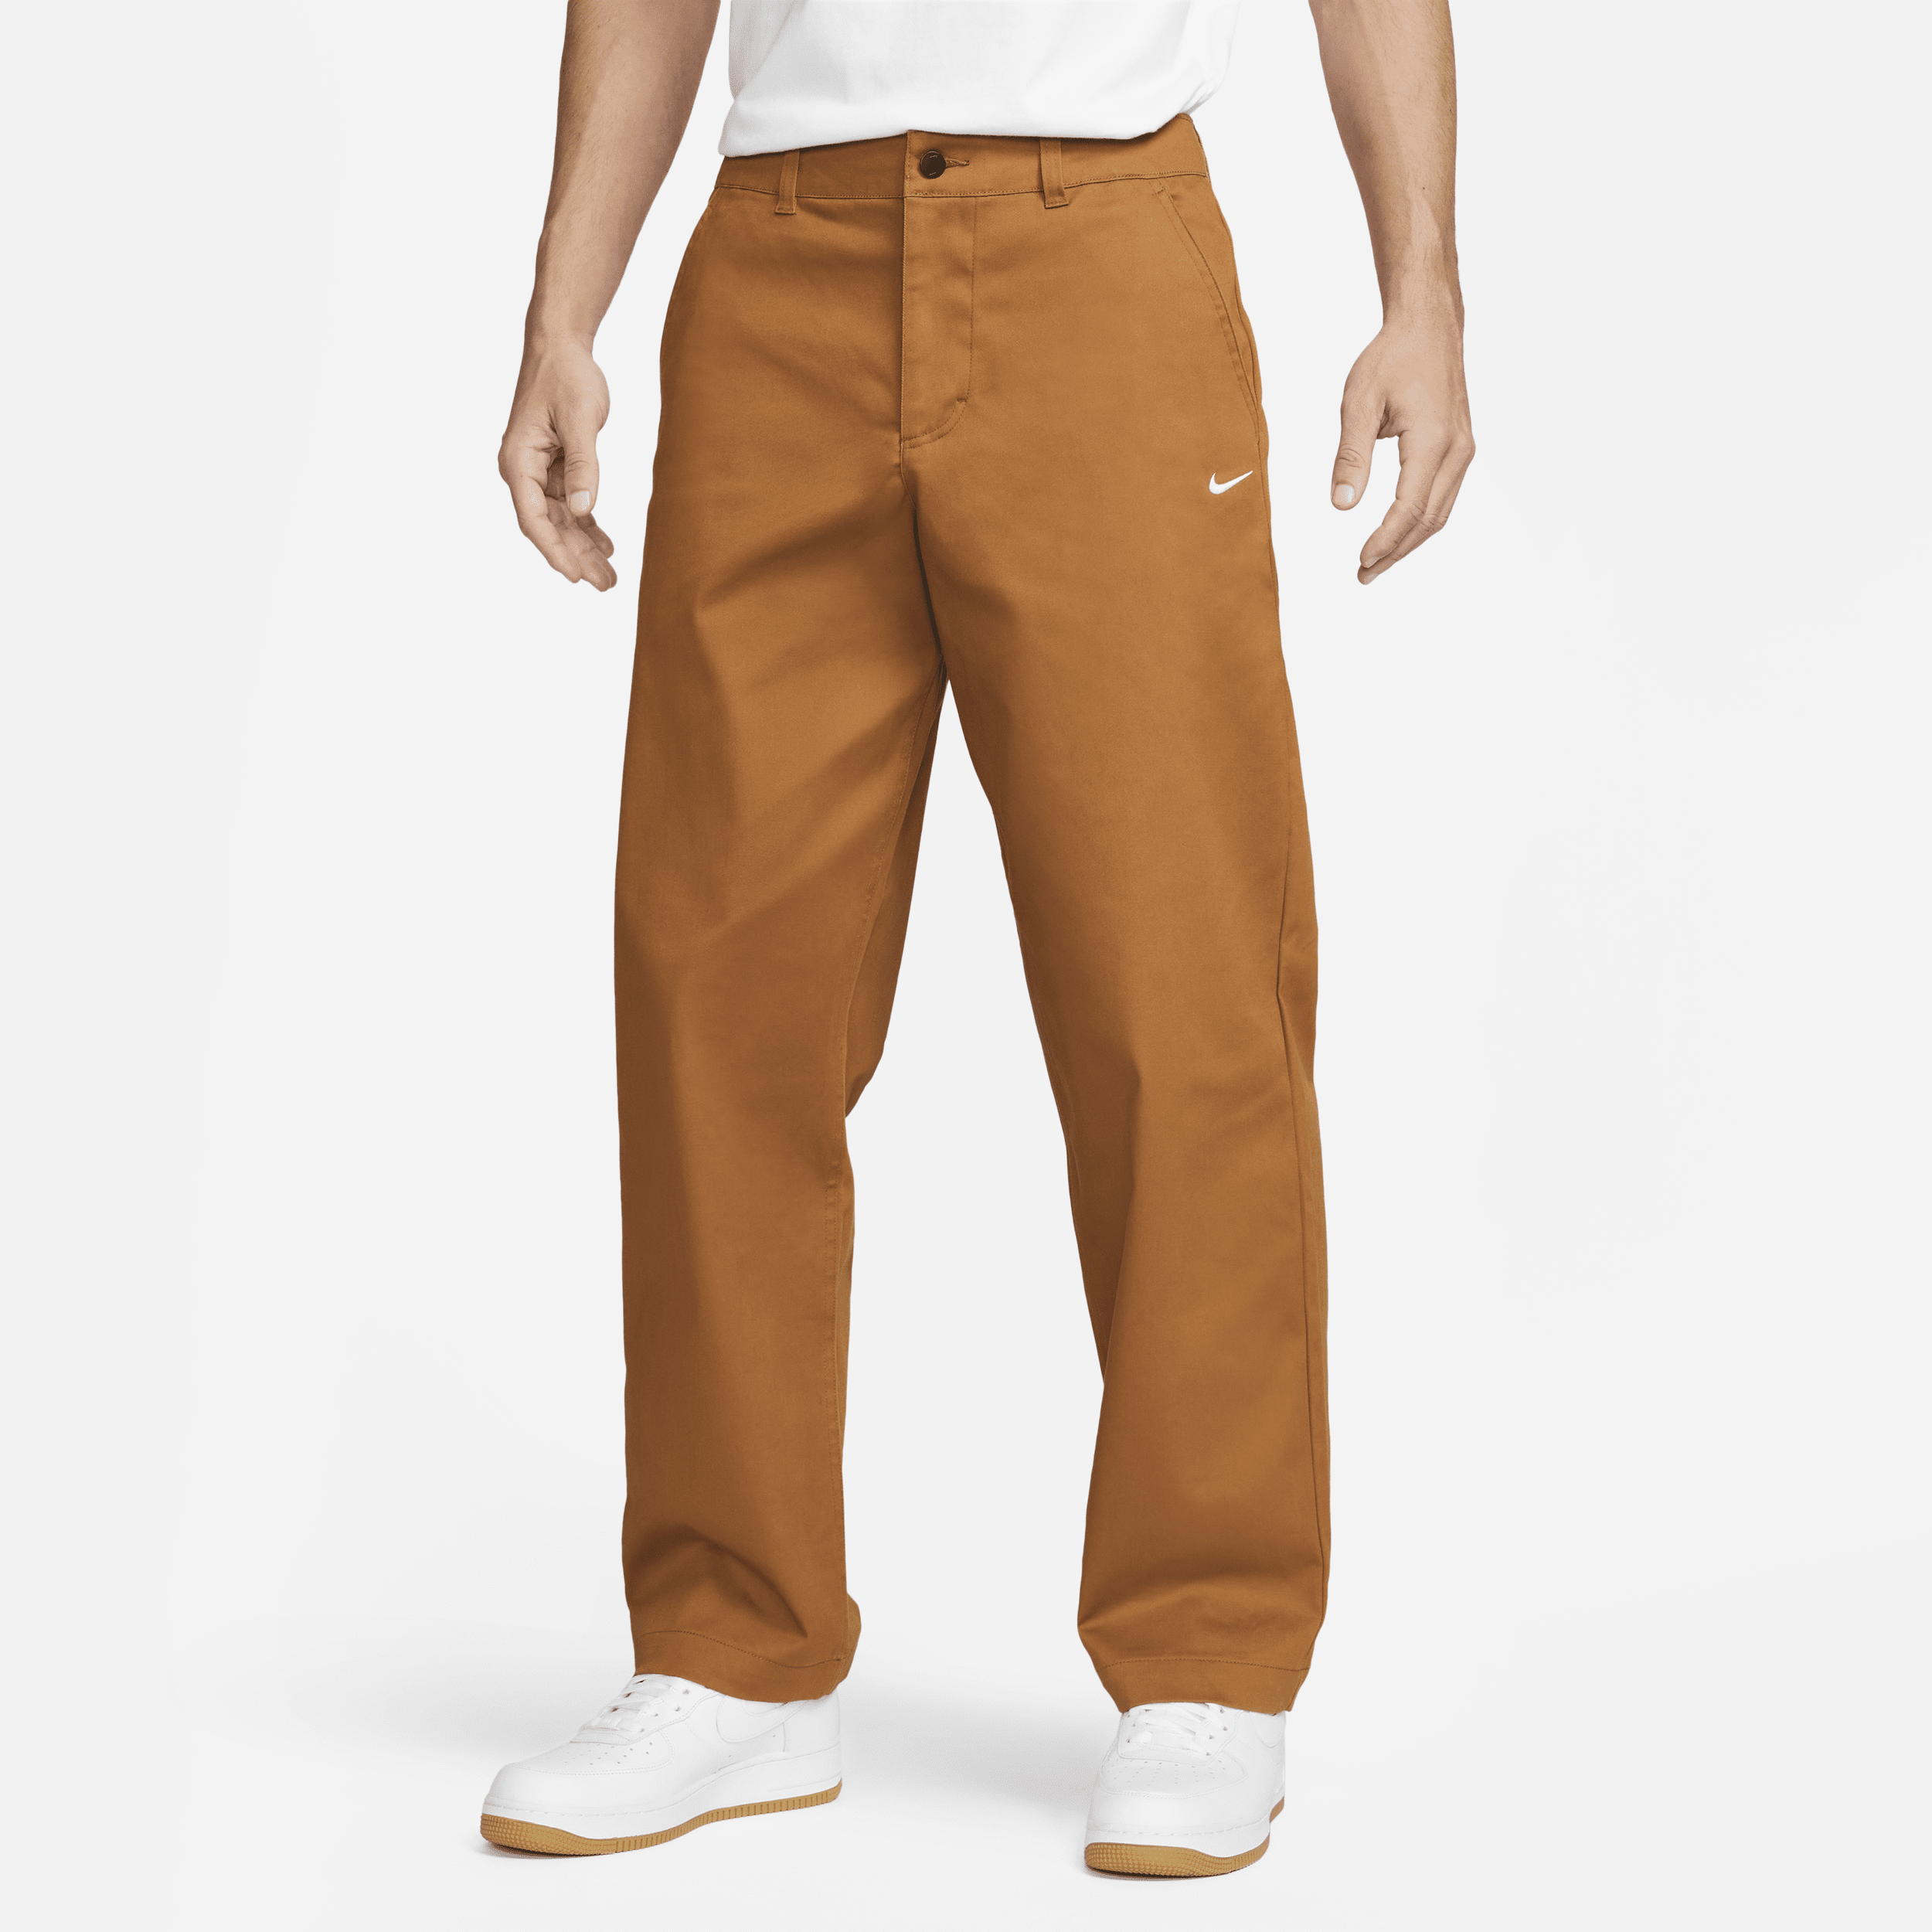 Pantaloni El Chino Nike Life – Uomo - Marrone